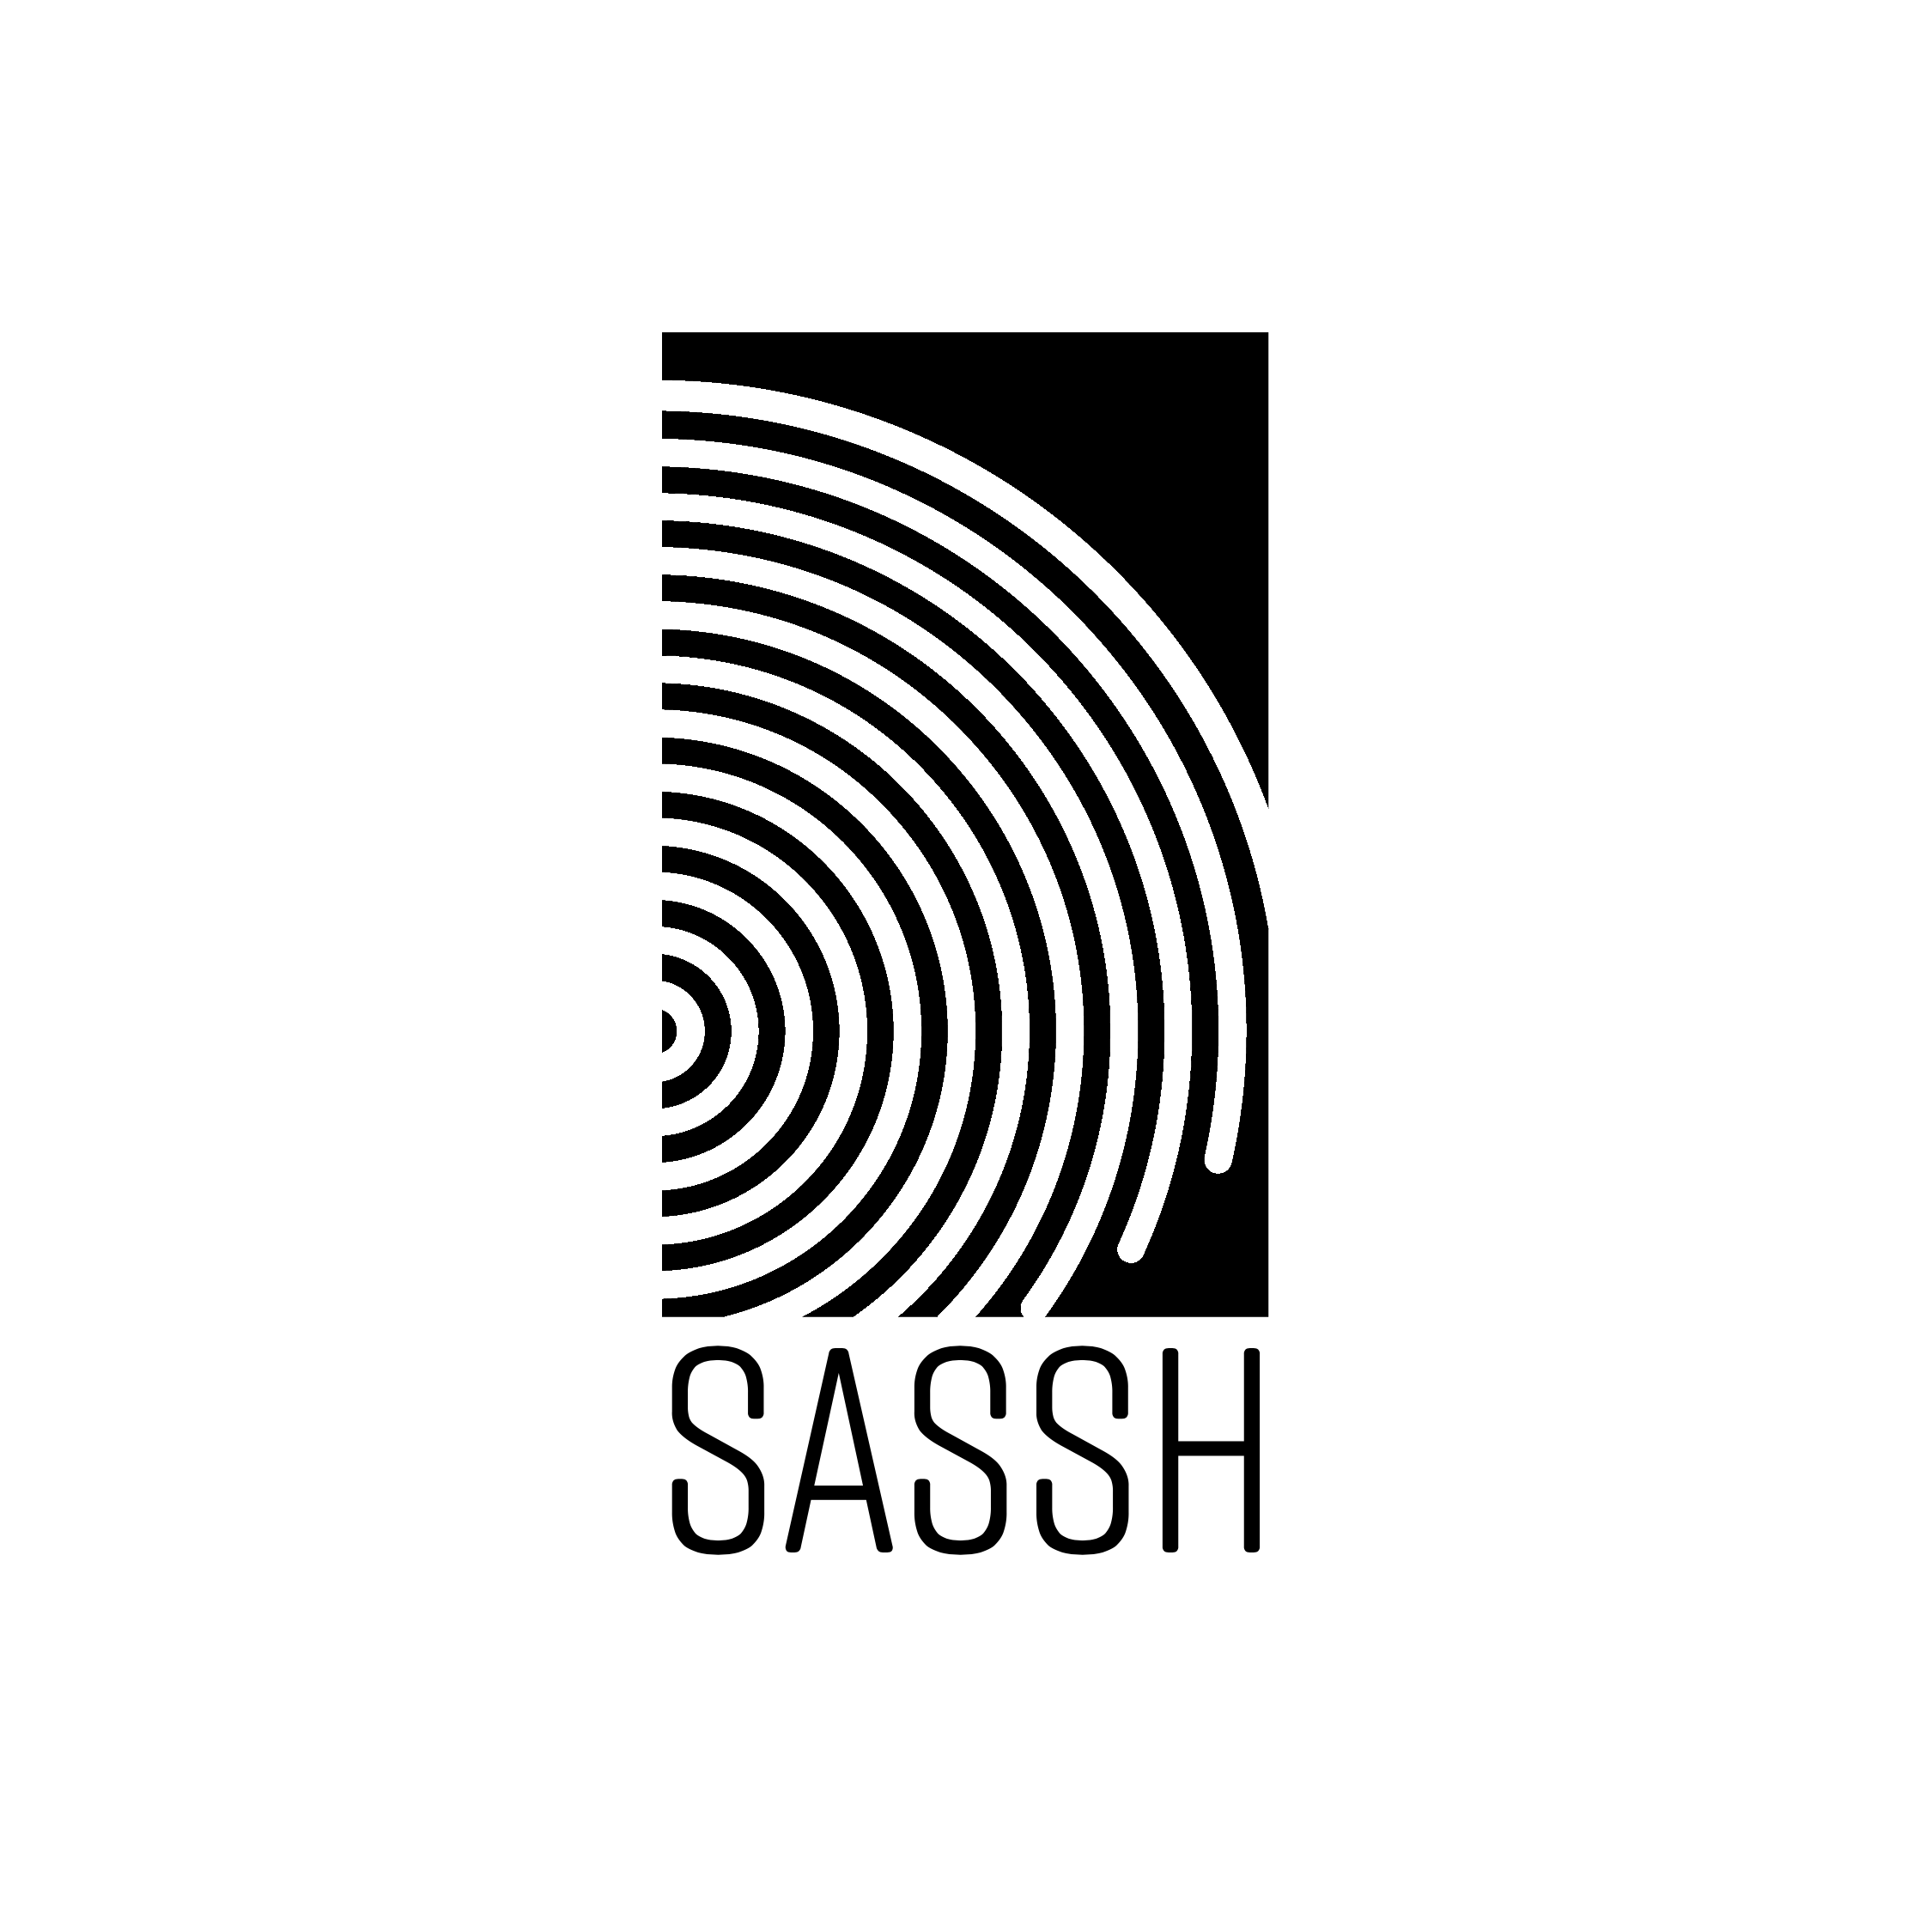 SASSH logo (black)